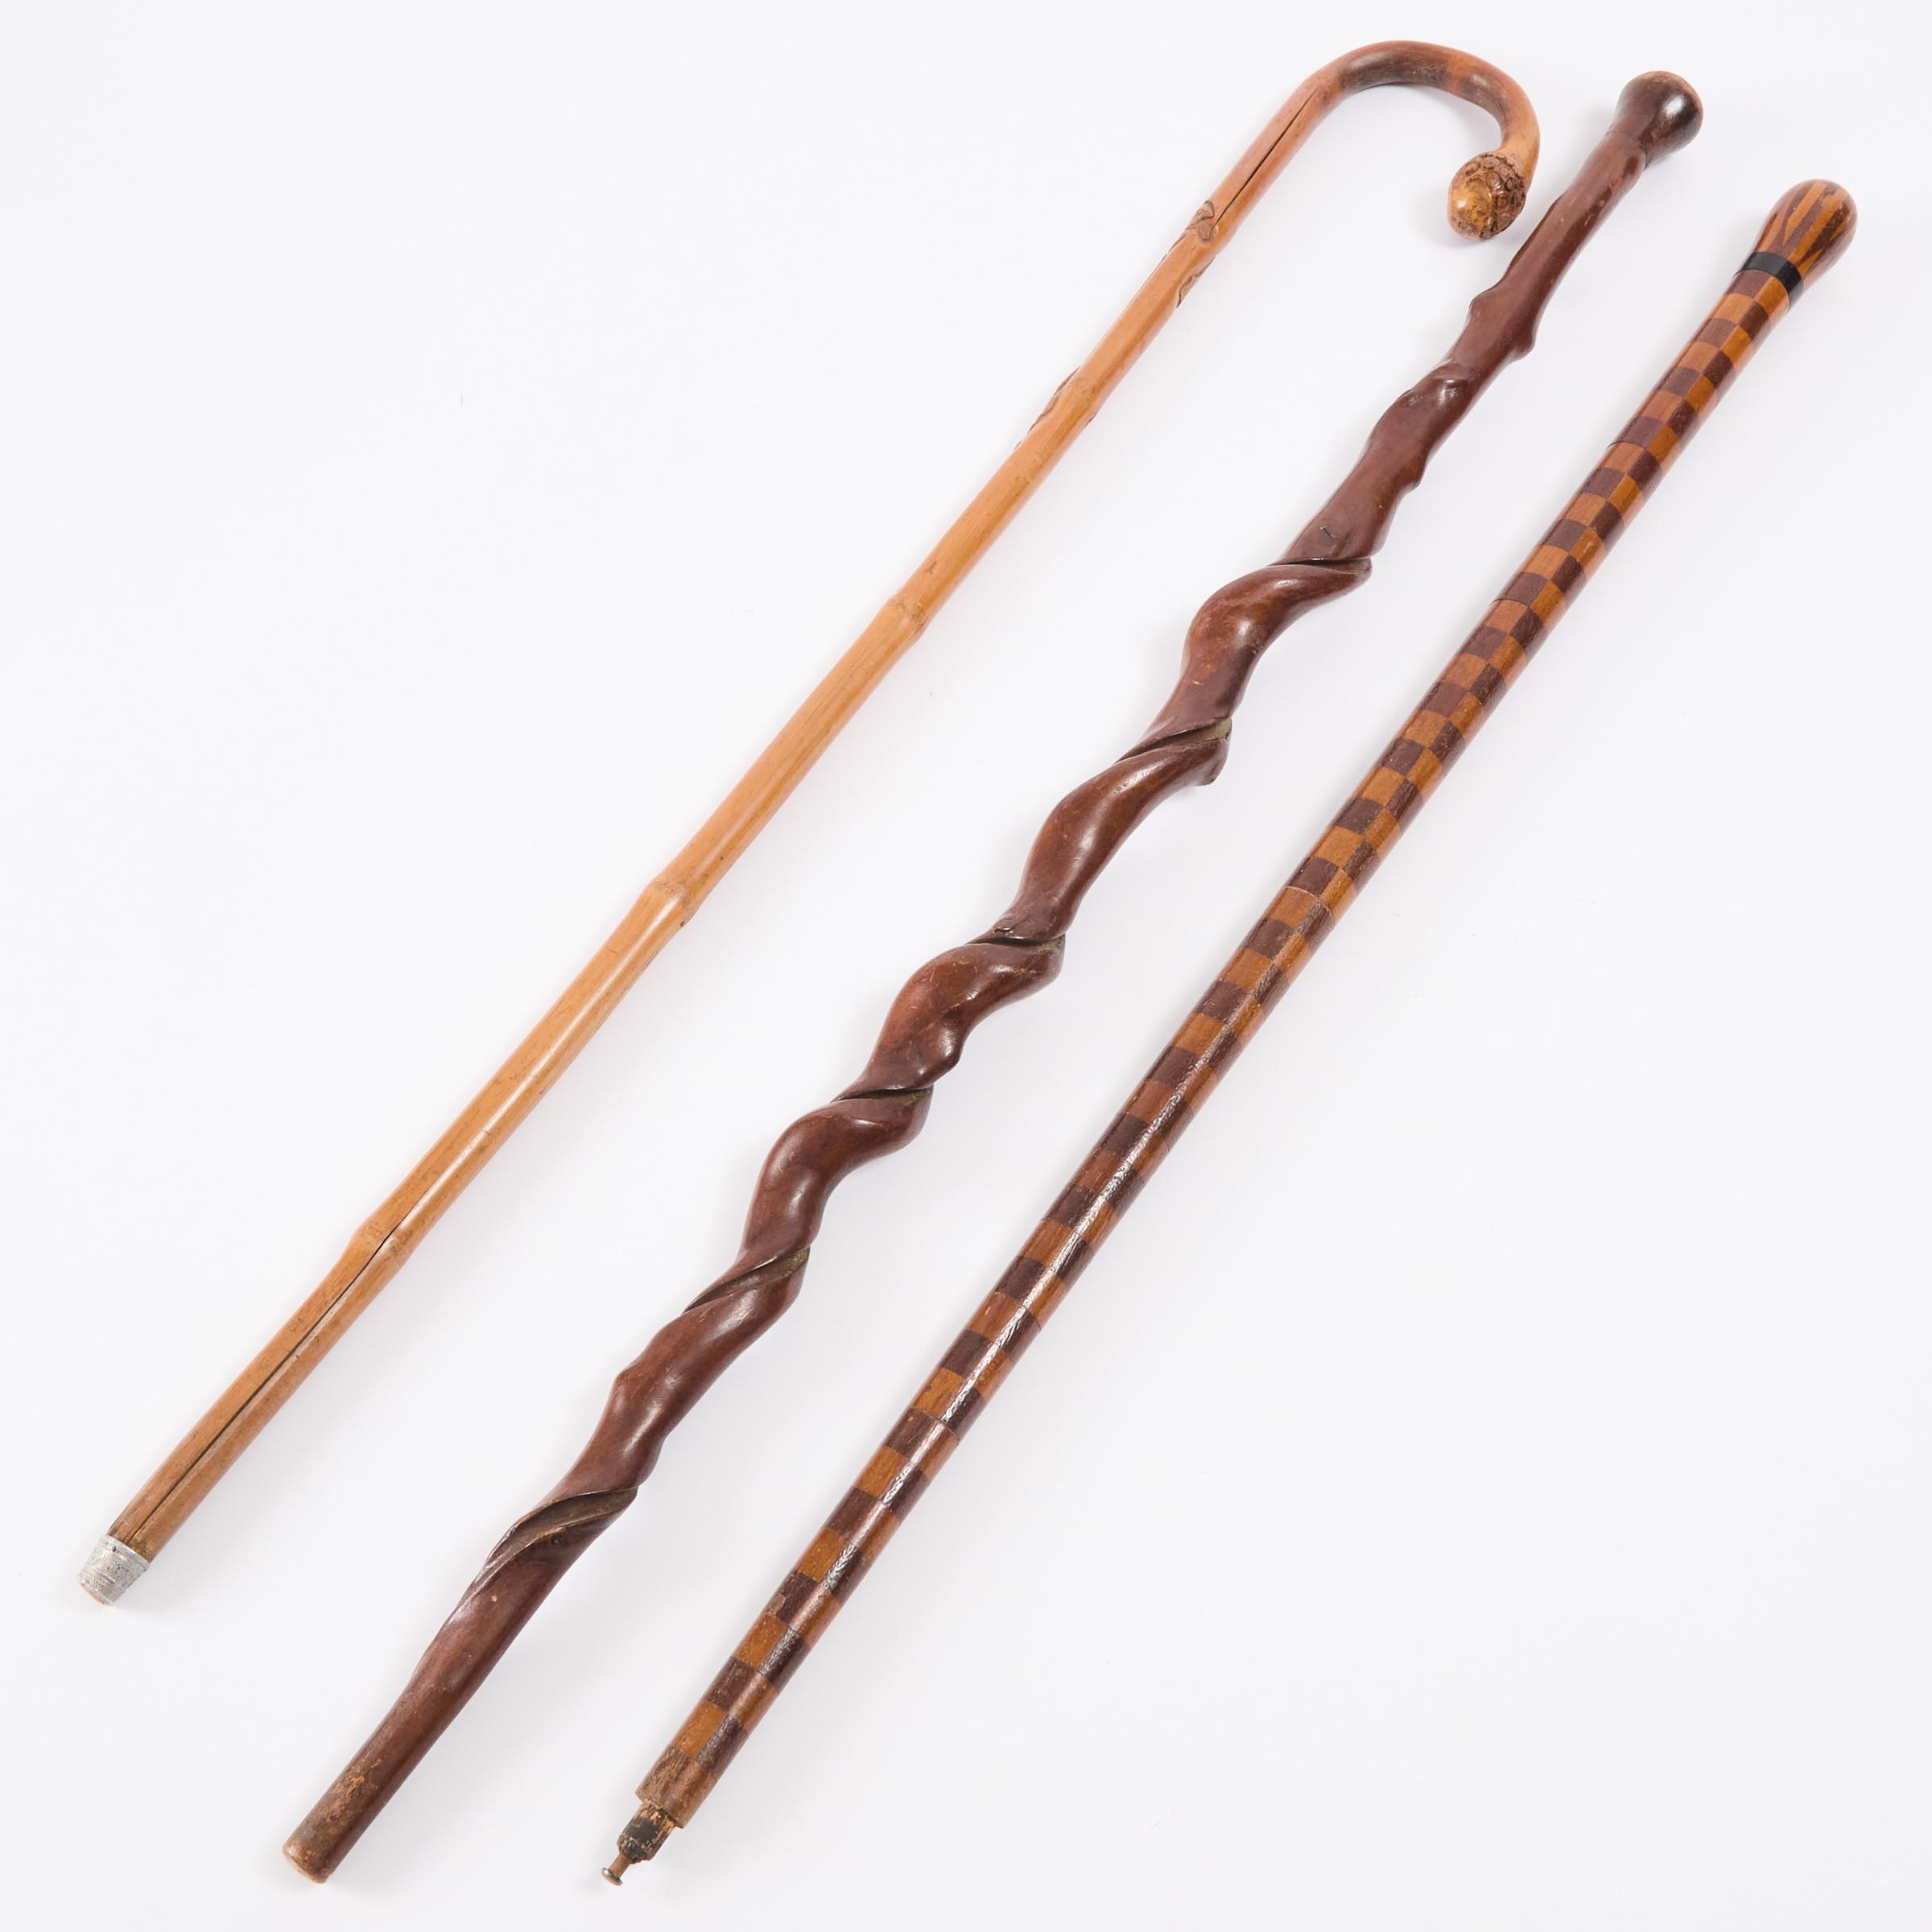 Two Folk Art Walking Sticks and 2fb04b0